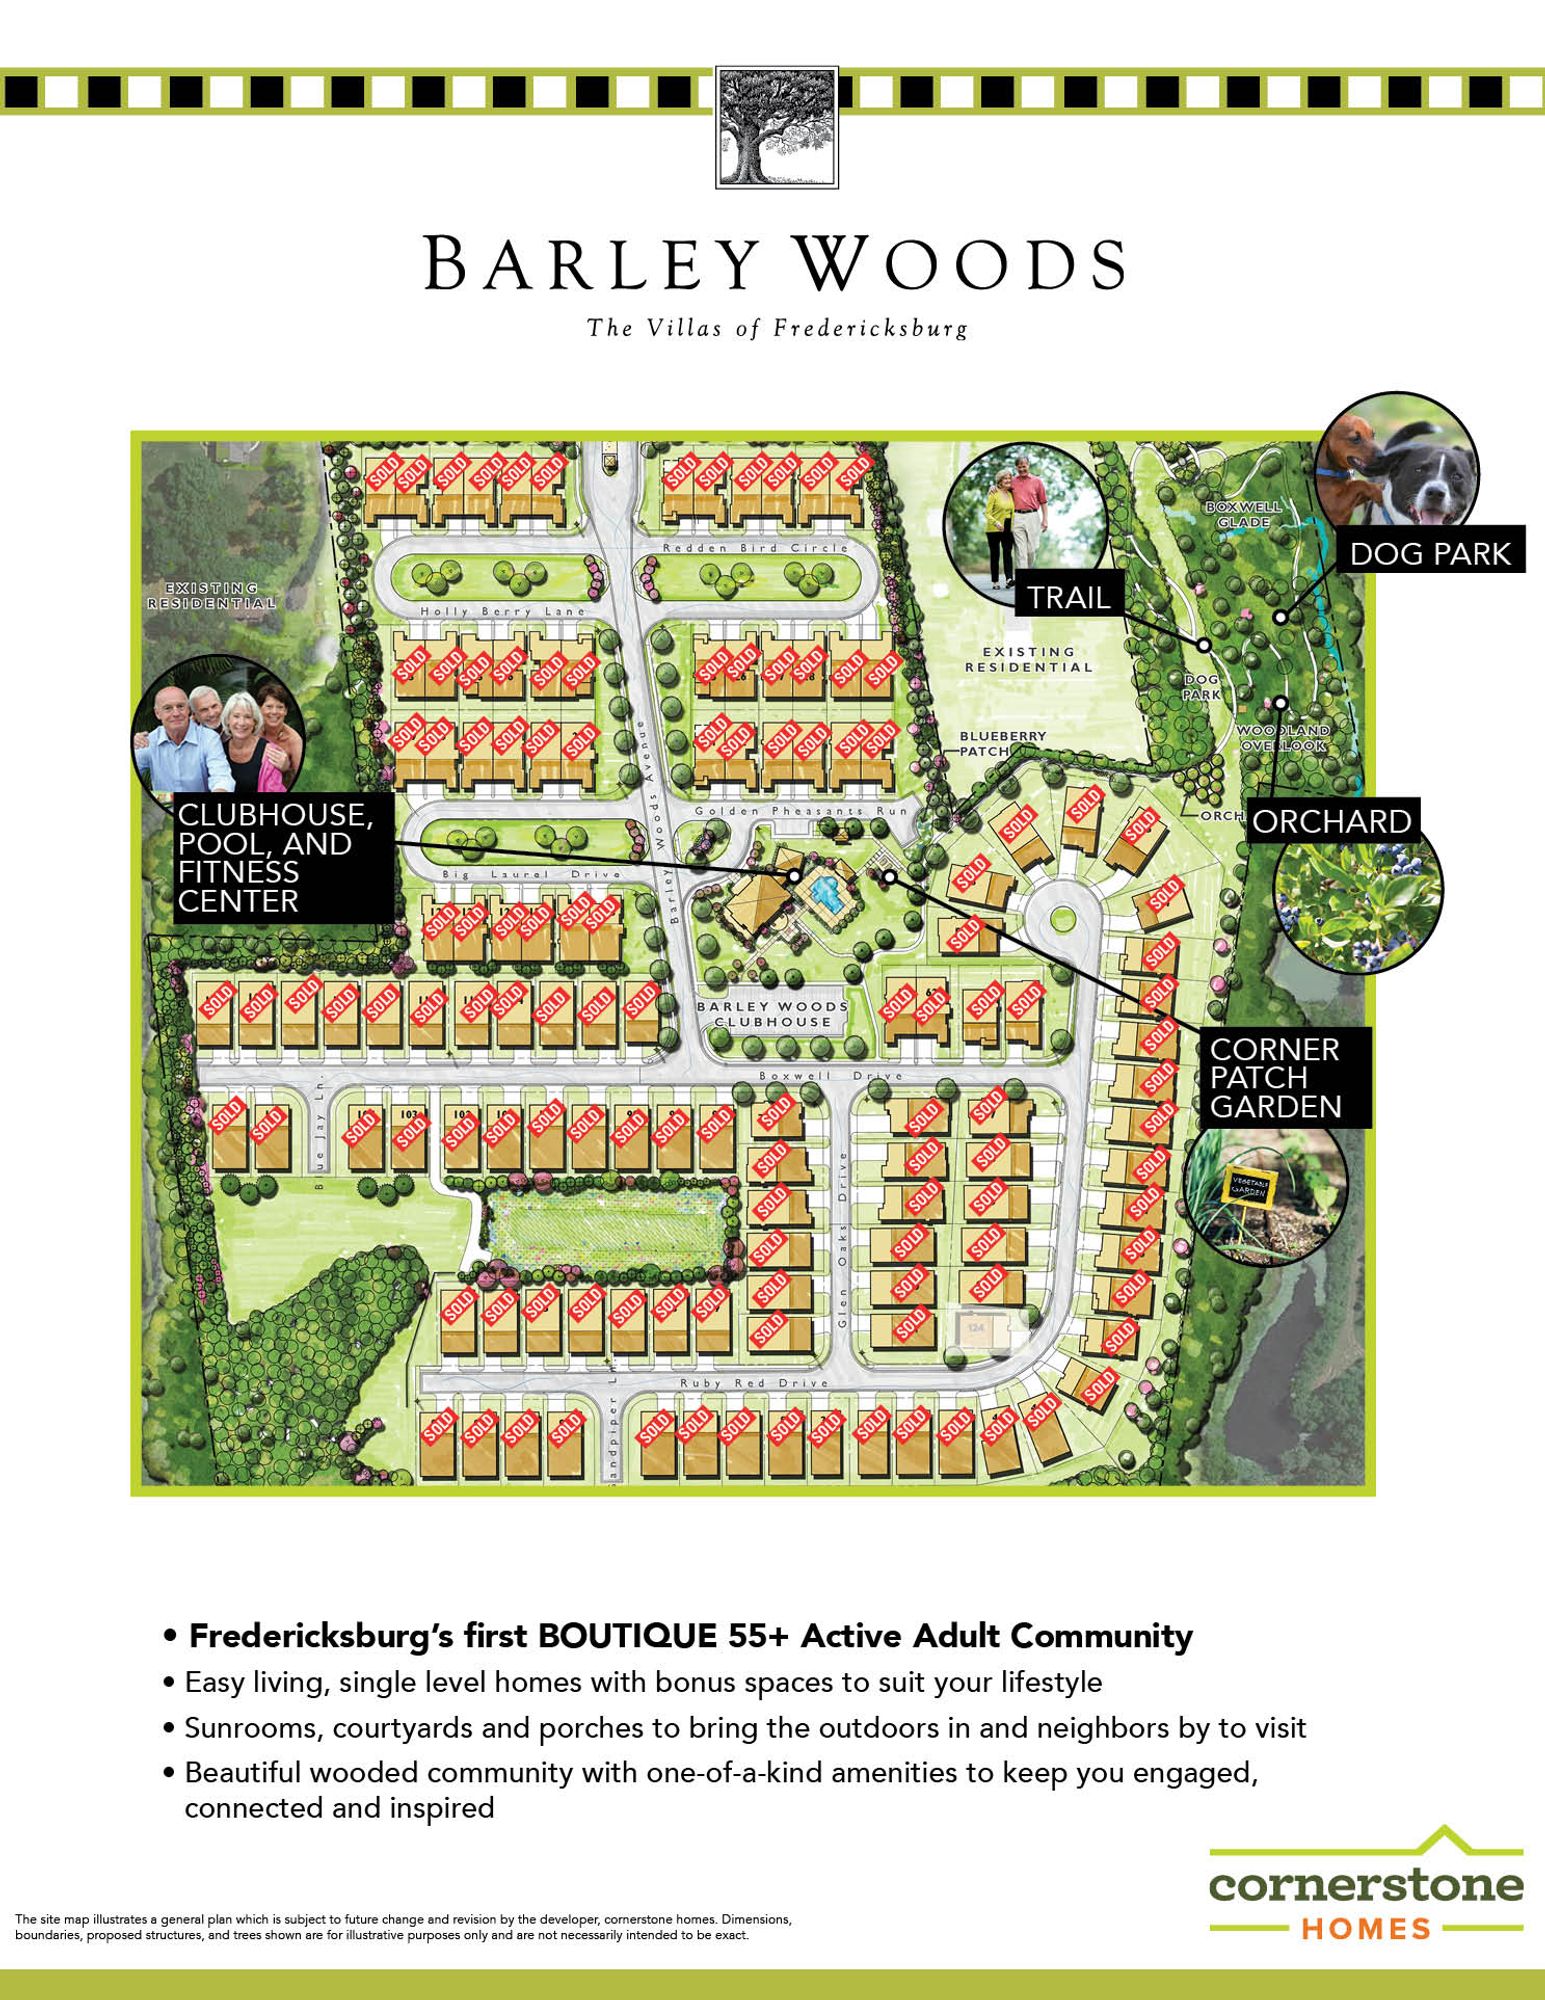 Barley Woods - The Villas of Fredericksburg